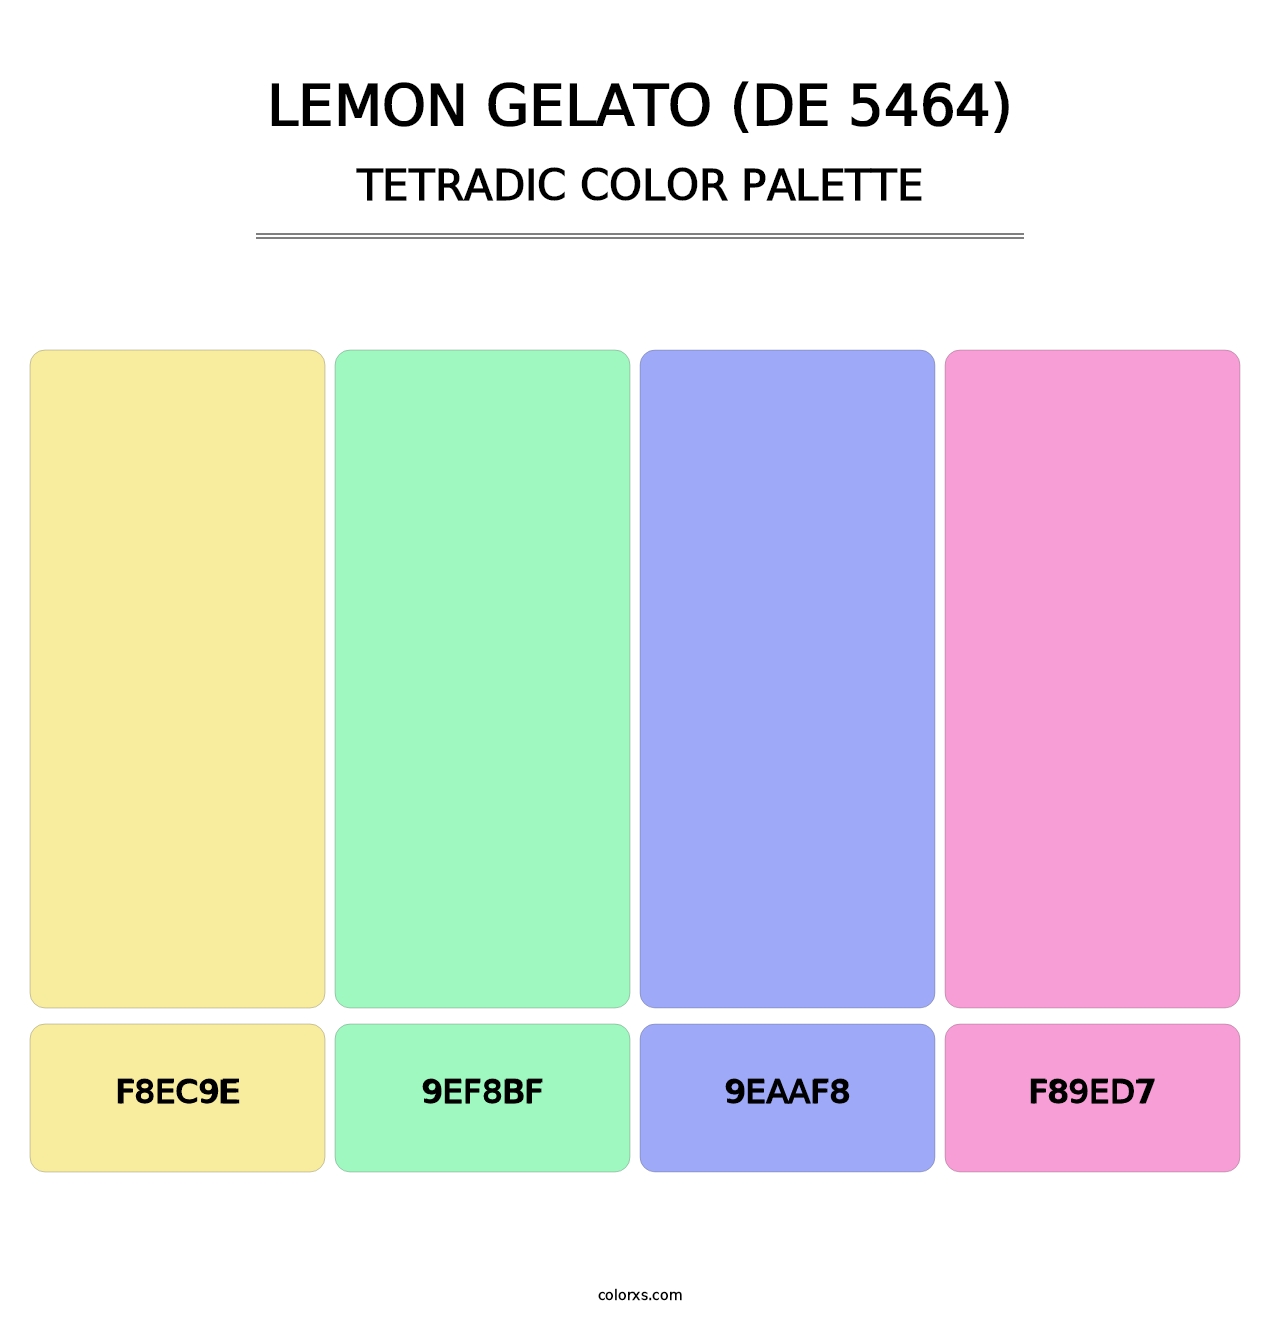 Lemon Gelato (DE 5464) - Tetradic Color Palette